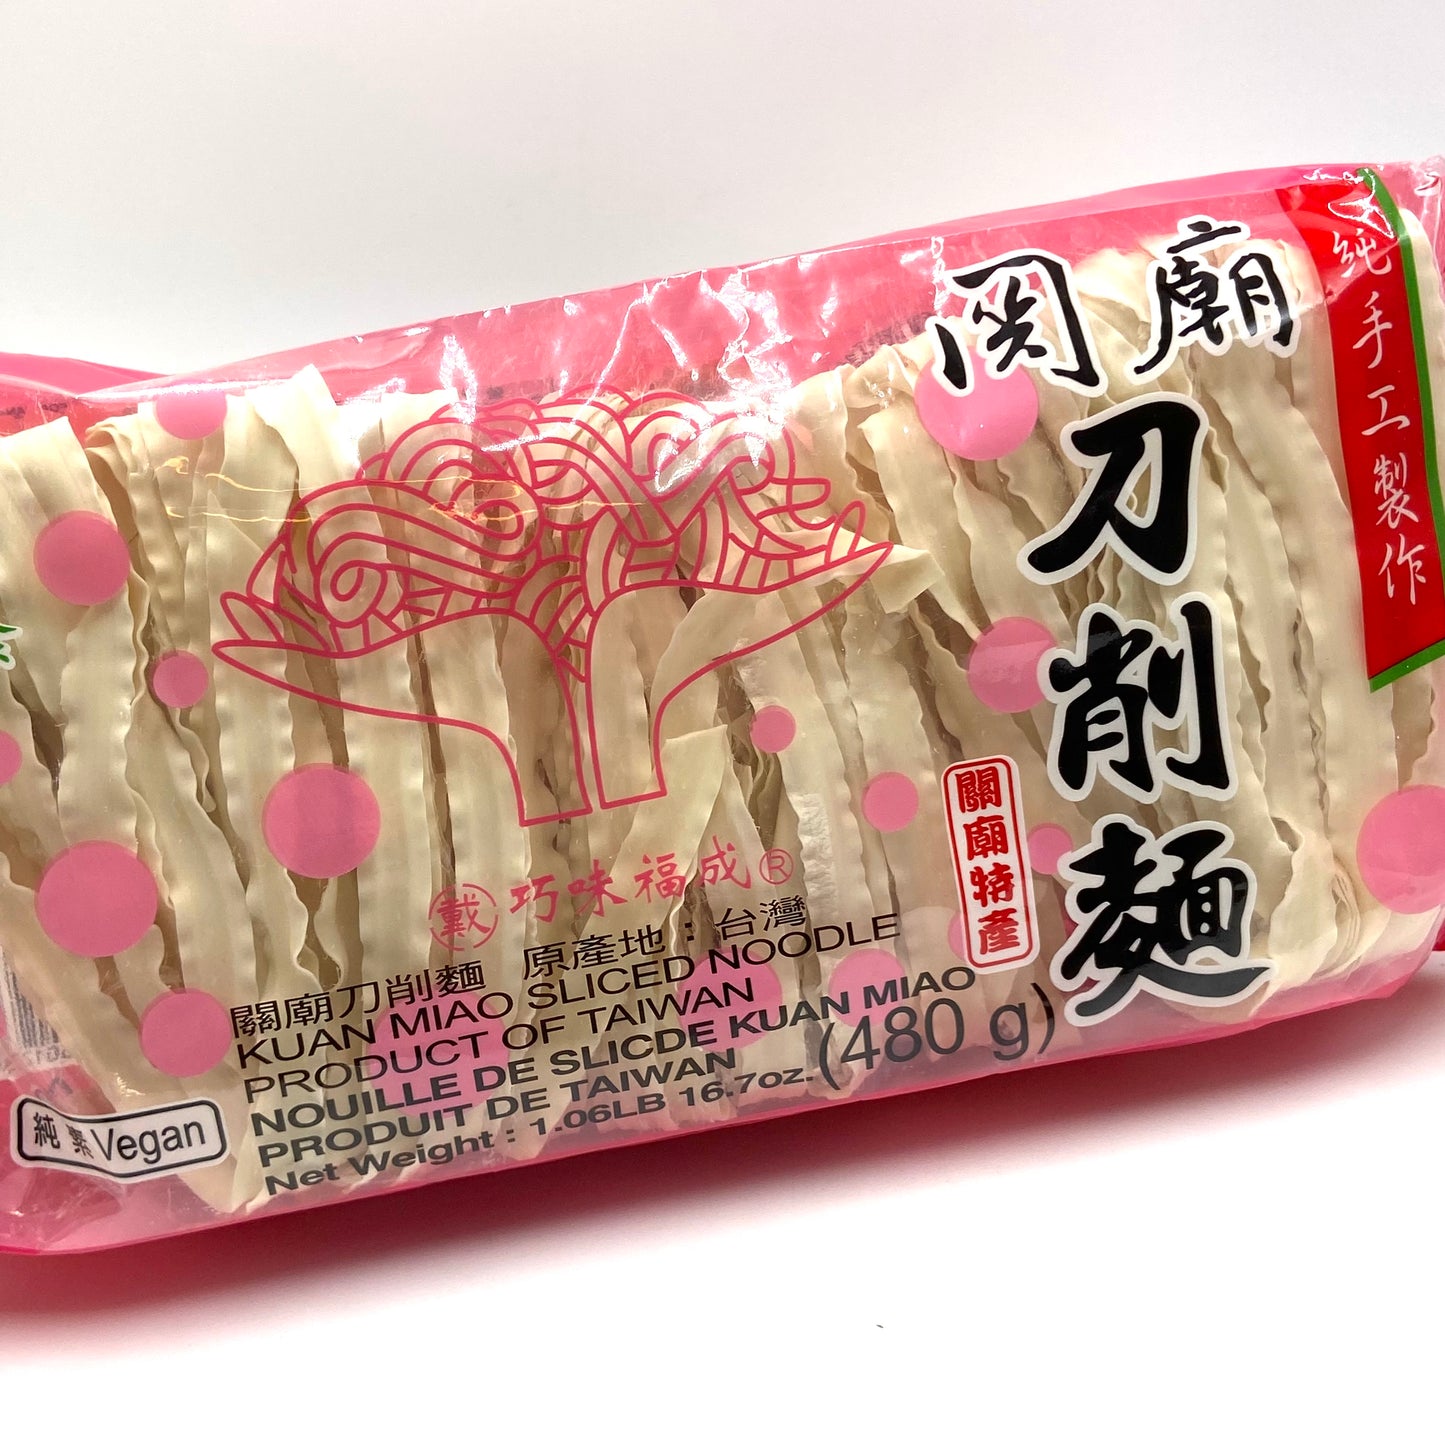 Fuchen Kuanmiao Sliced Noodles 480g 福成刀削麵